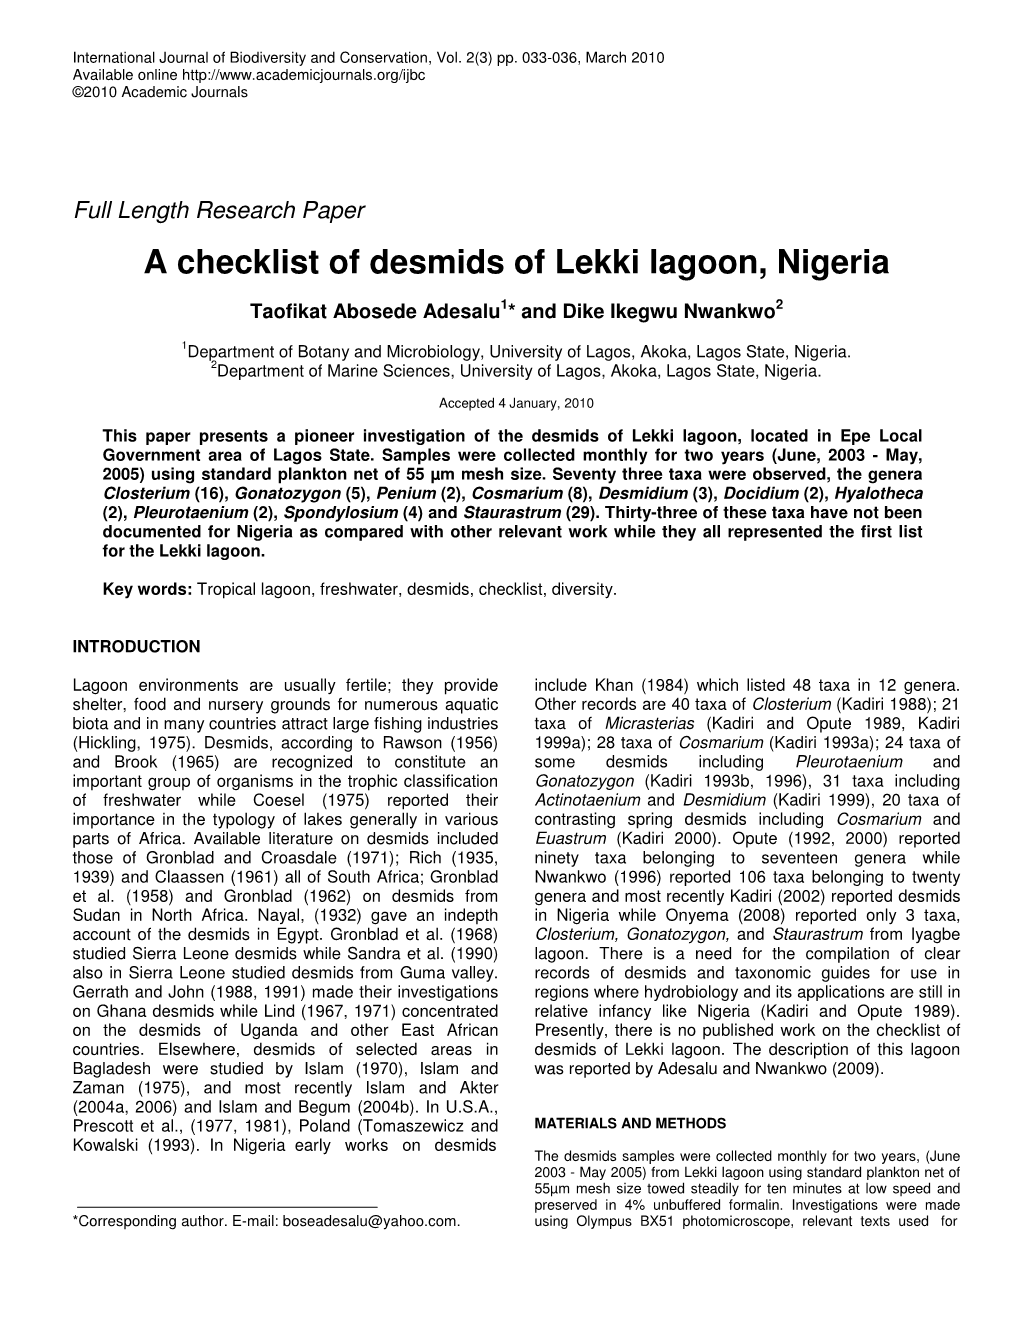 A Checklist of Desmids of Lekki Lagoon, Nigeria